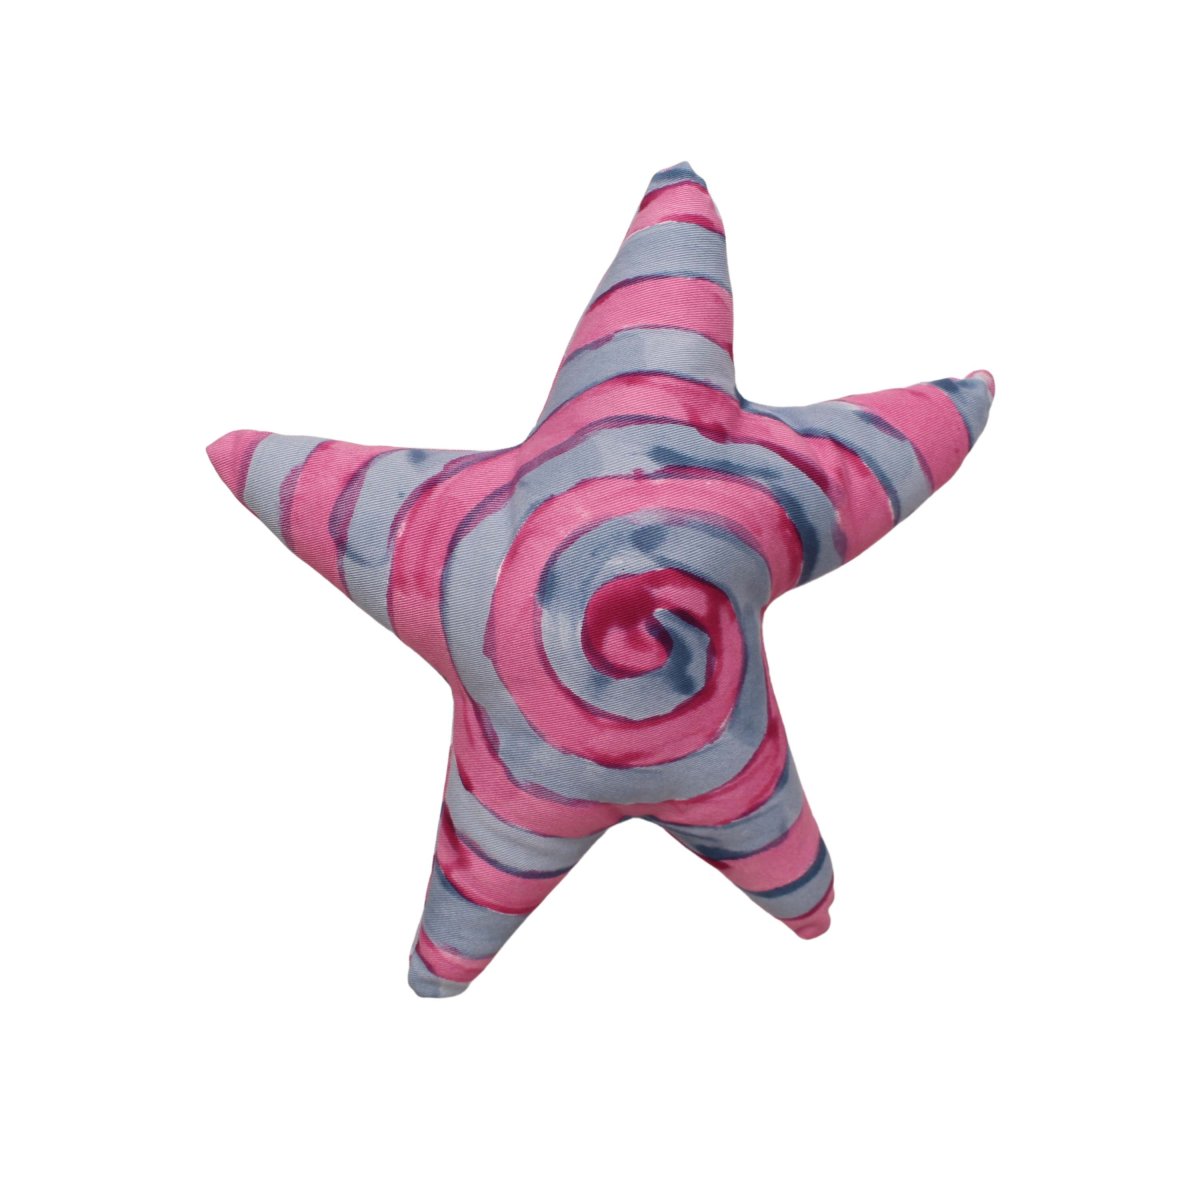 denim star pillows【Peony and light blue spiral】